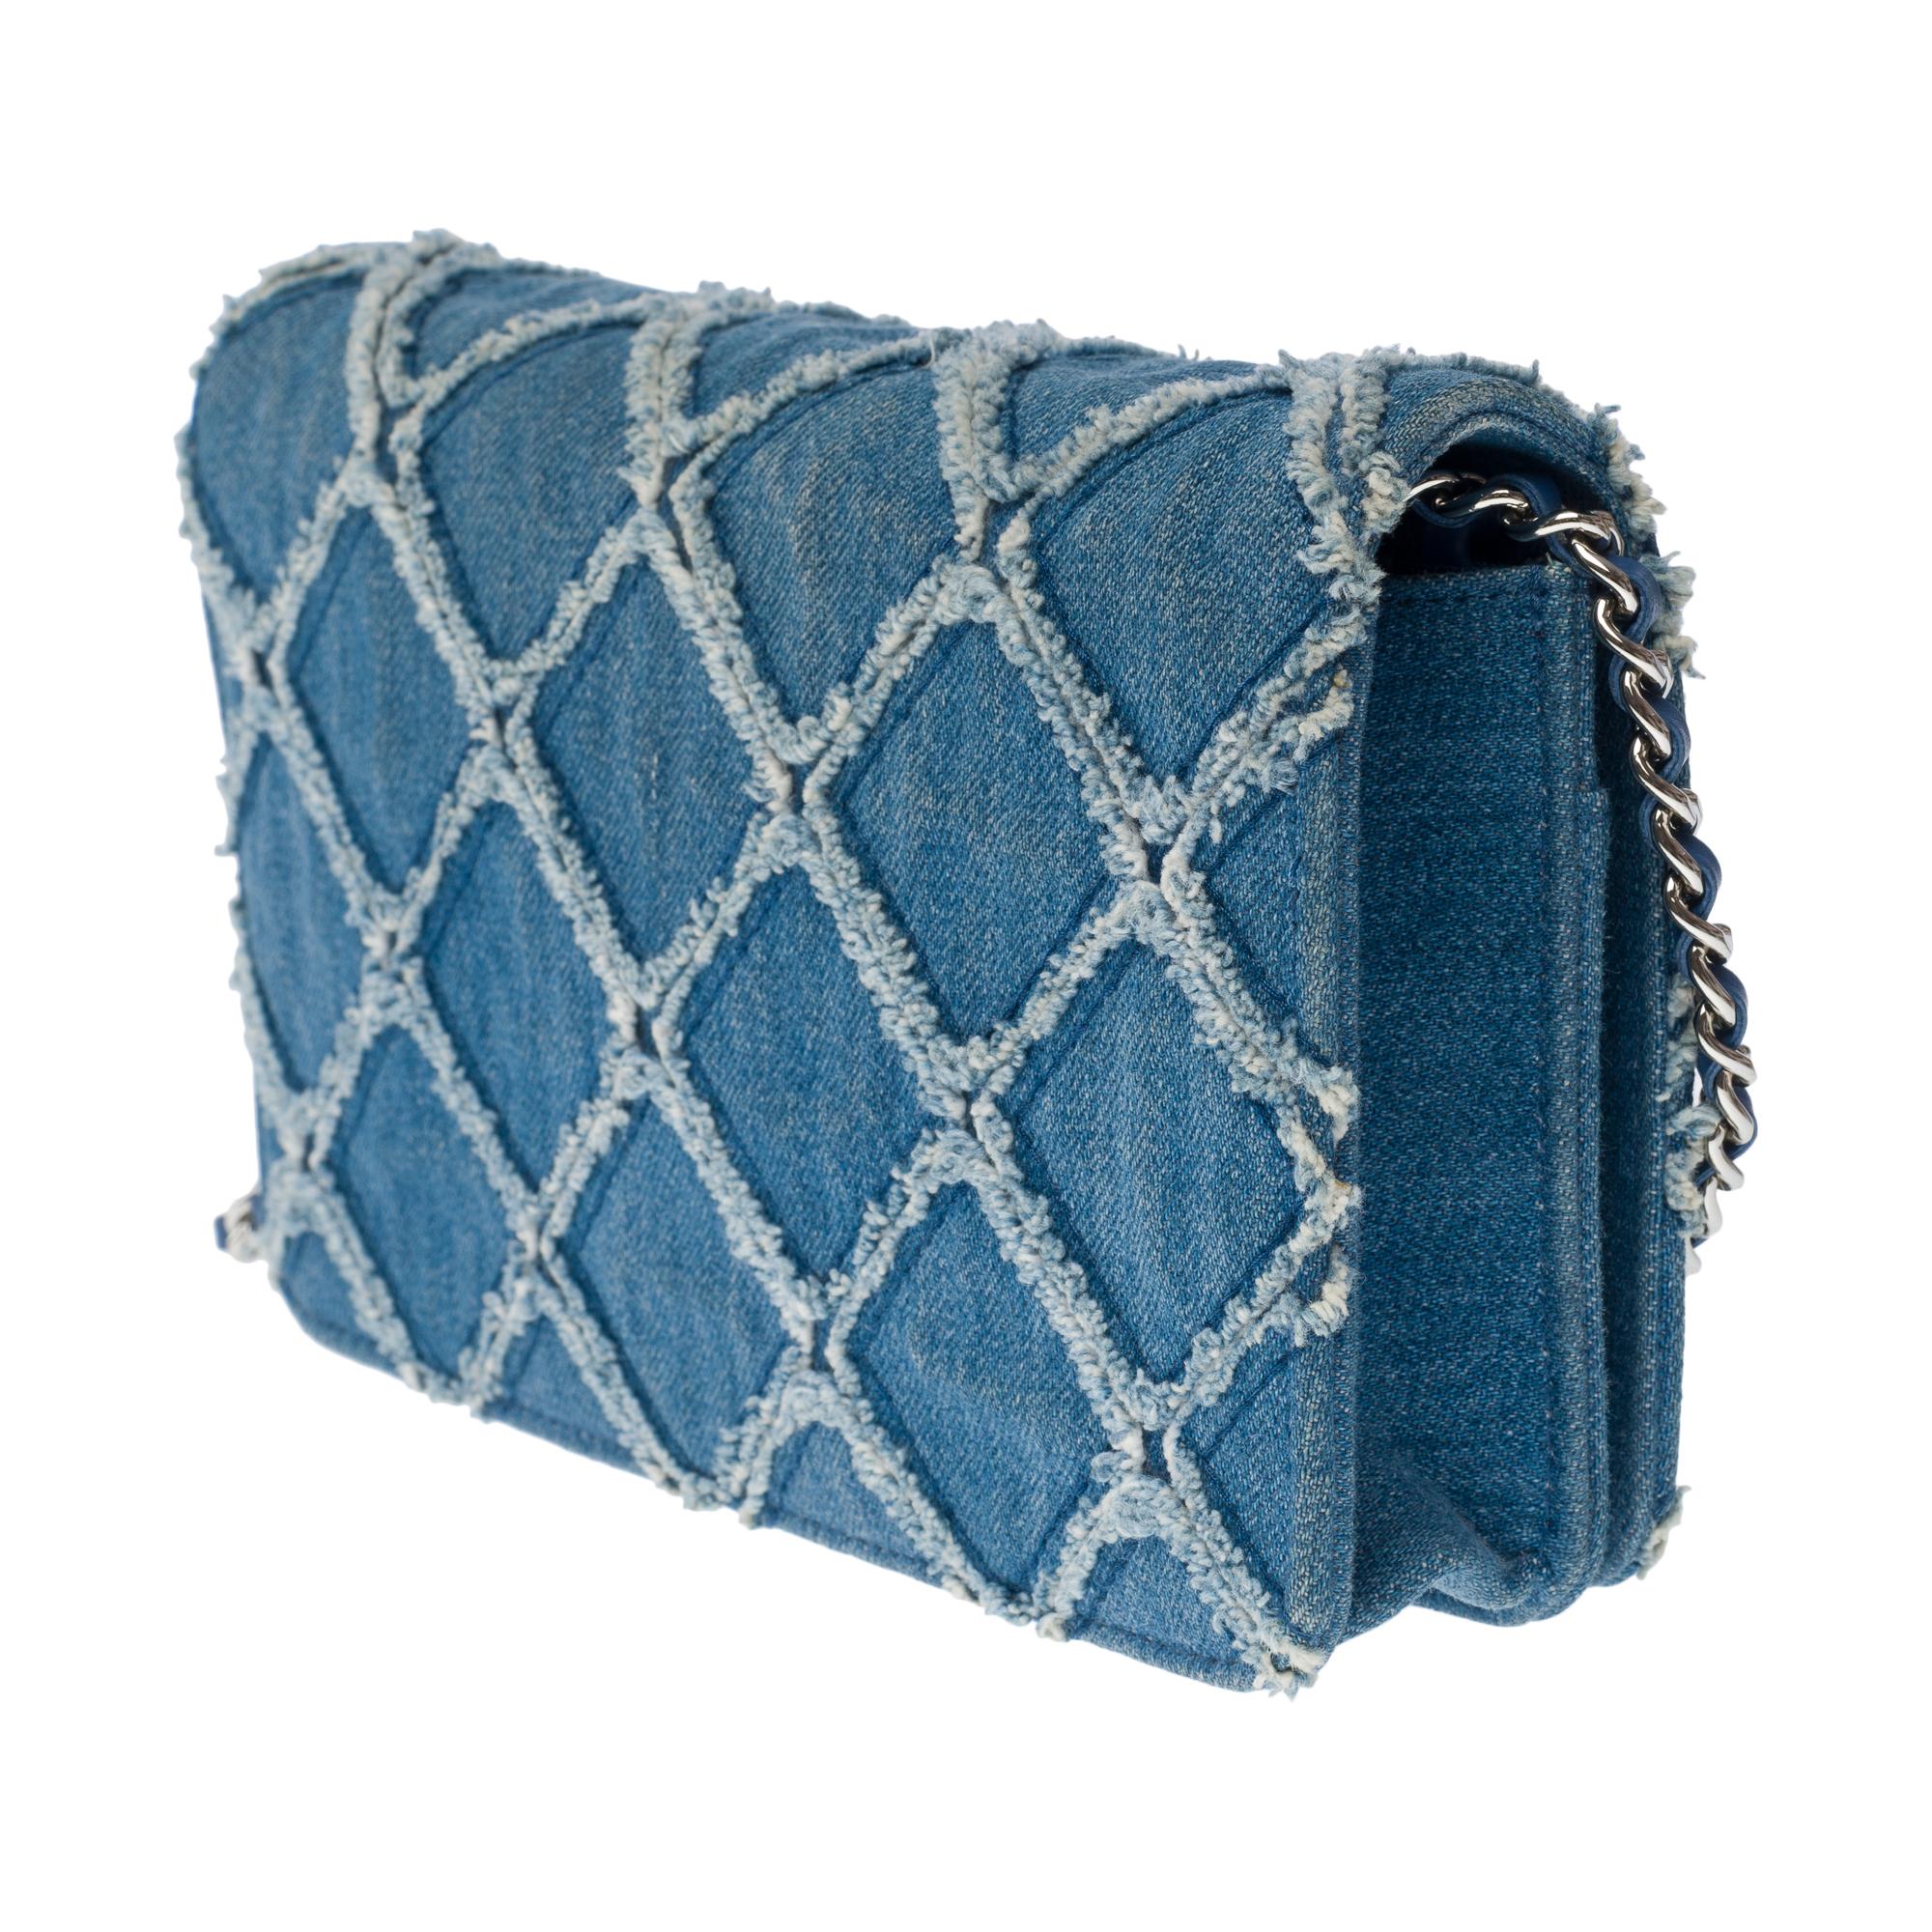 Rare & Amazing Chanel Wallet on Chain (WOC) shoulder bag in Blue denim, SHW 2